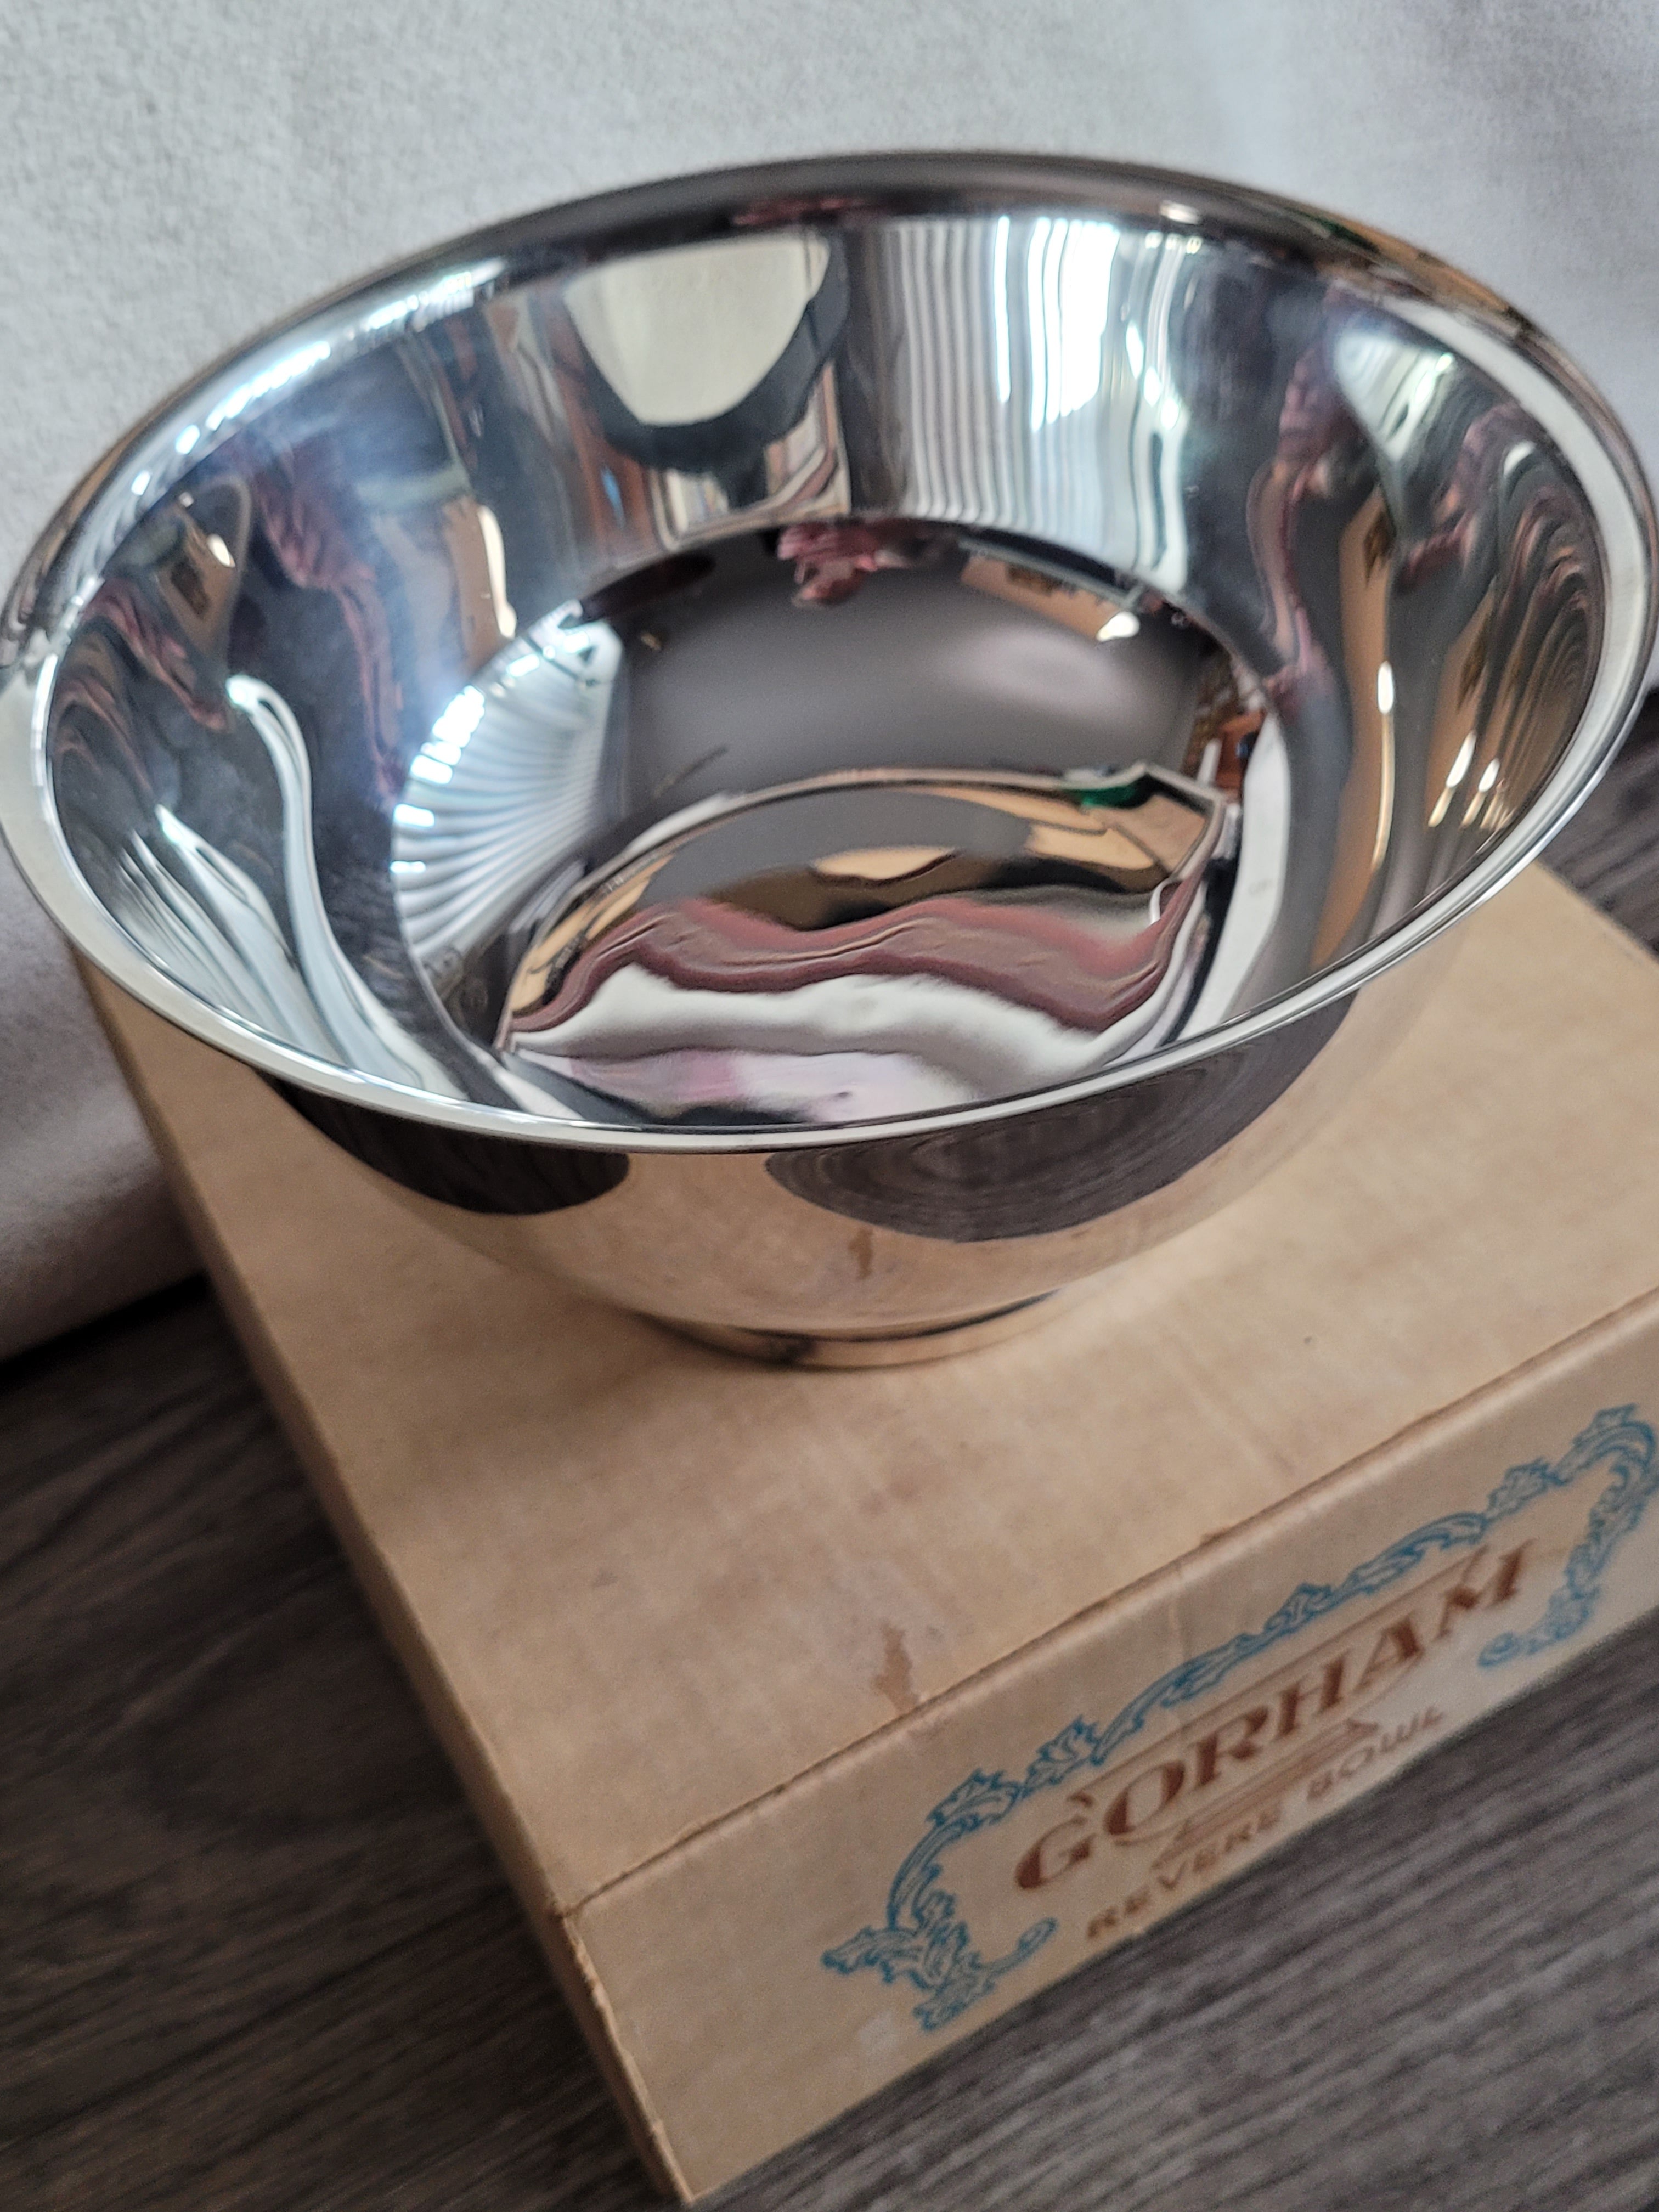 Gorham Revere silver plate 10.25" bowl